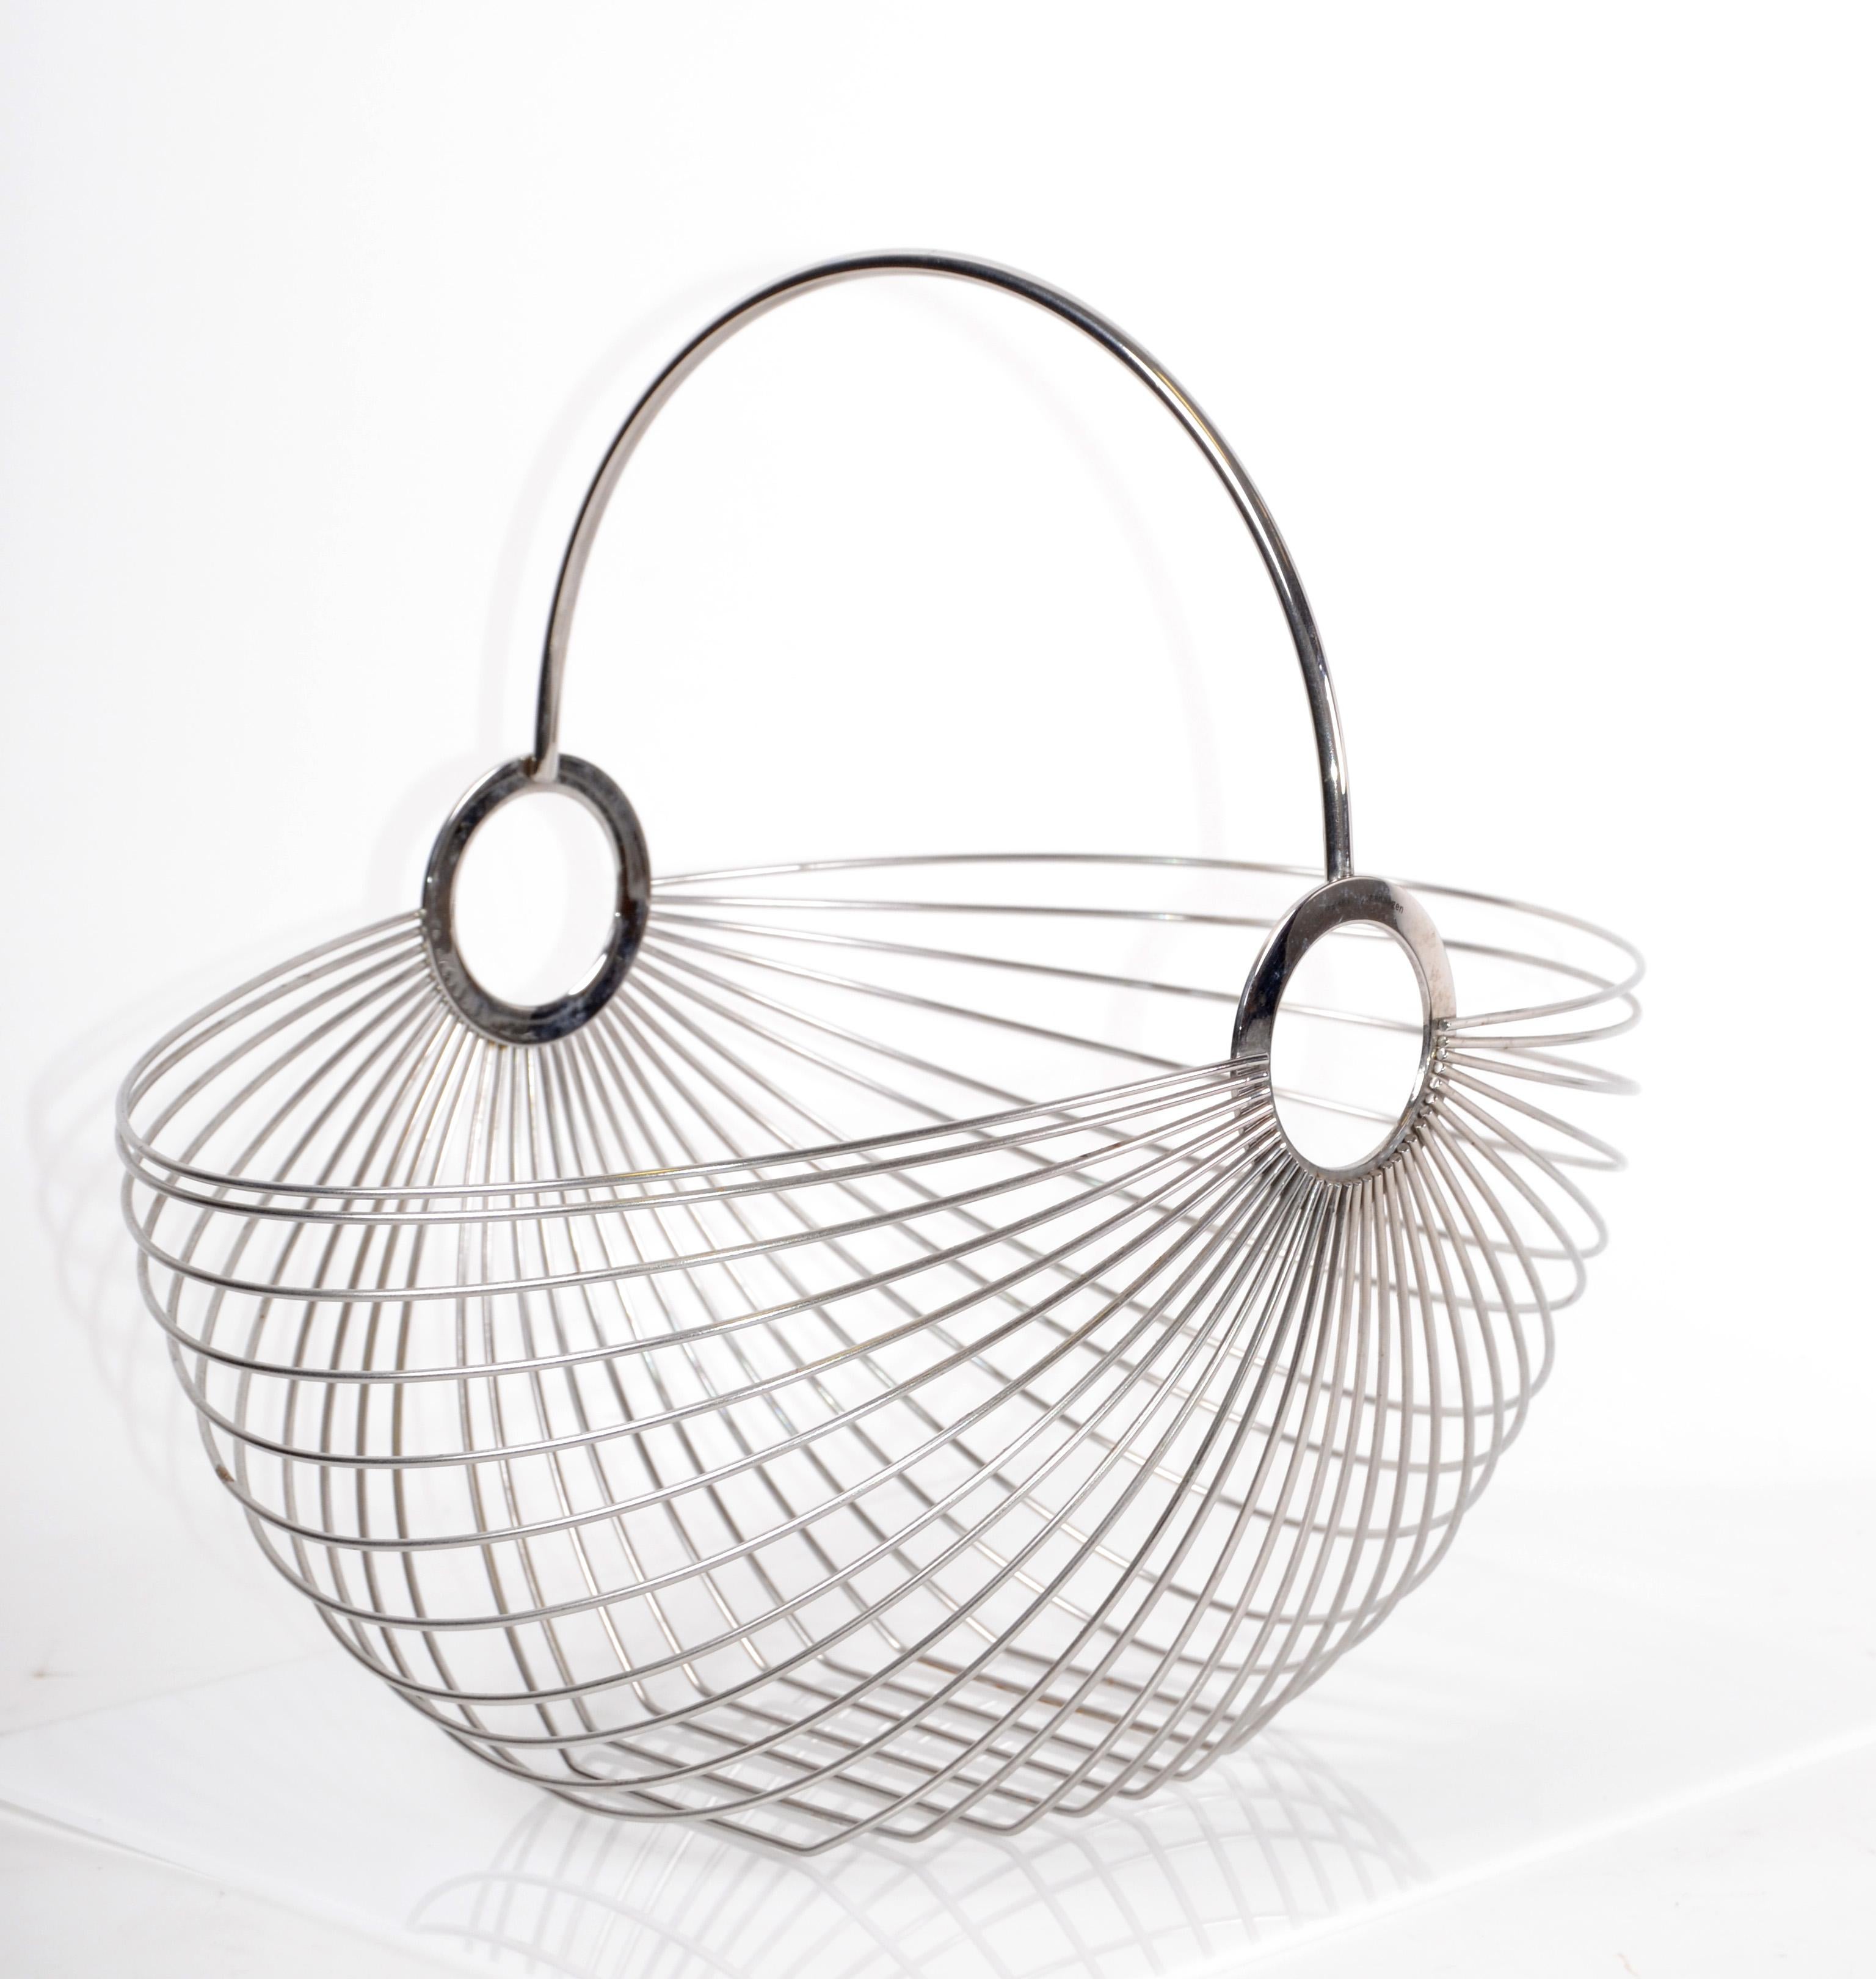 Ole Palsby Scandinavian Modern Decorative Stainless-Steel Basket Copenhagen For Sale 6